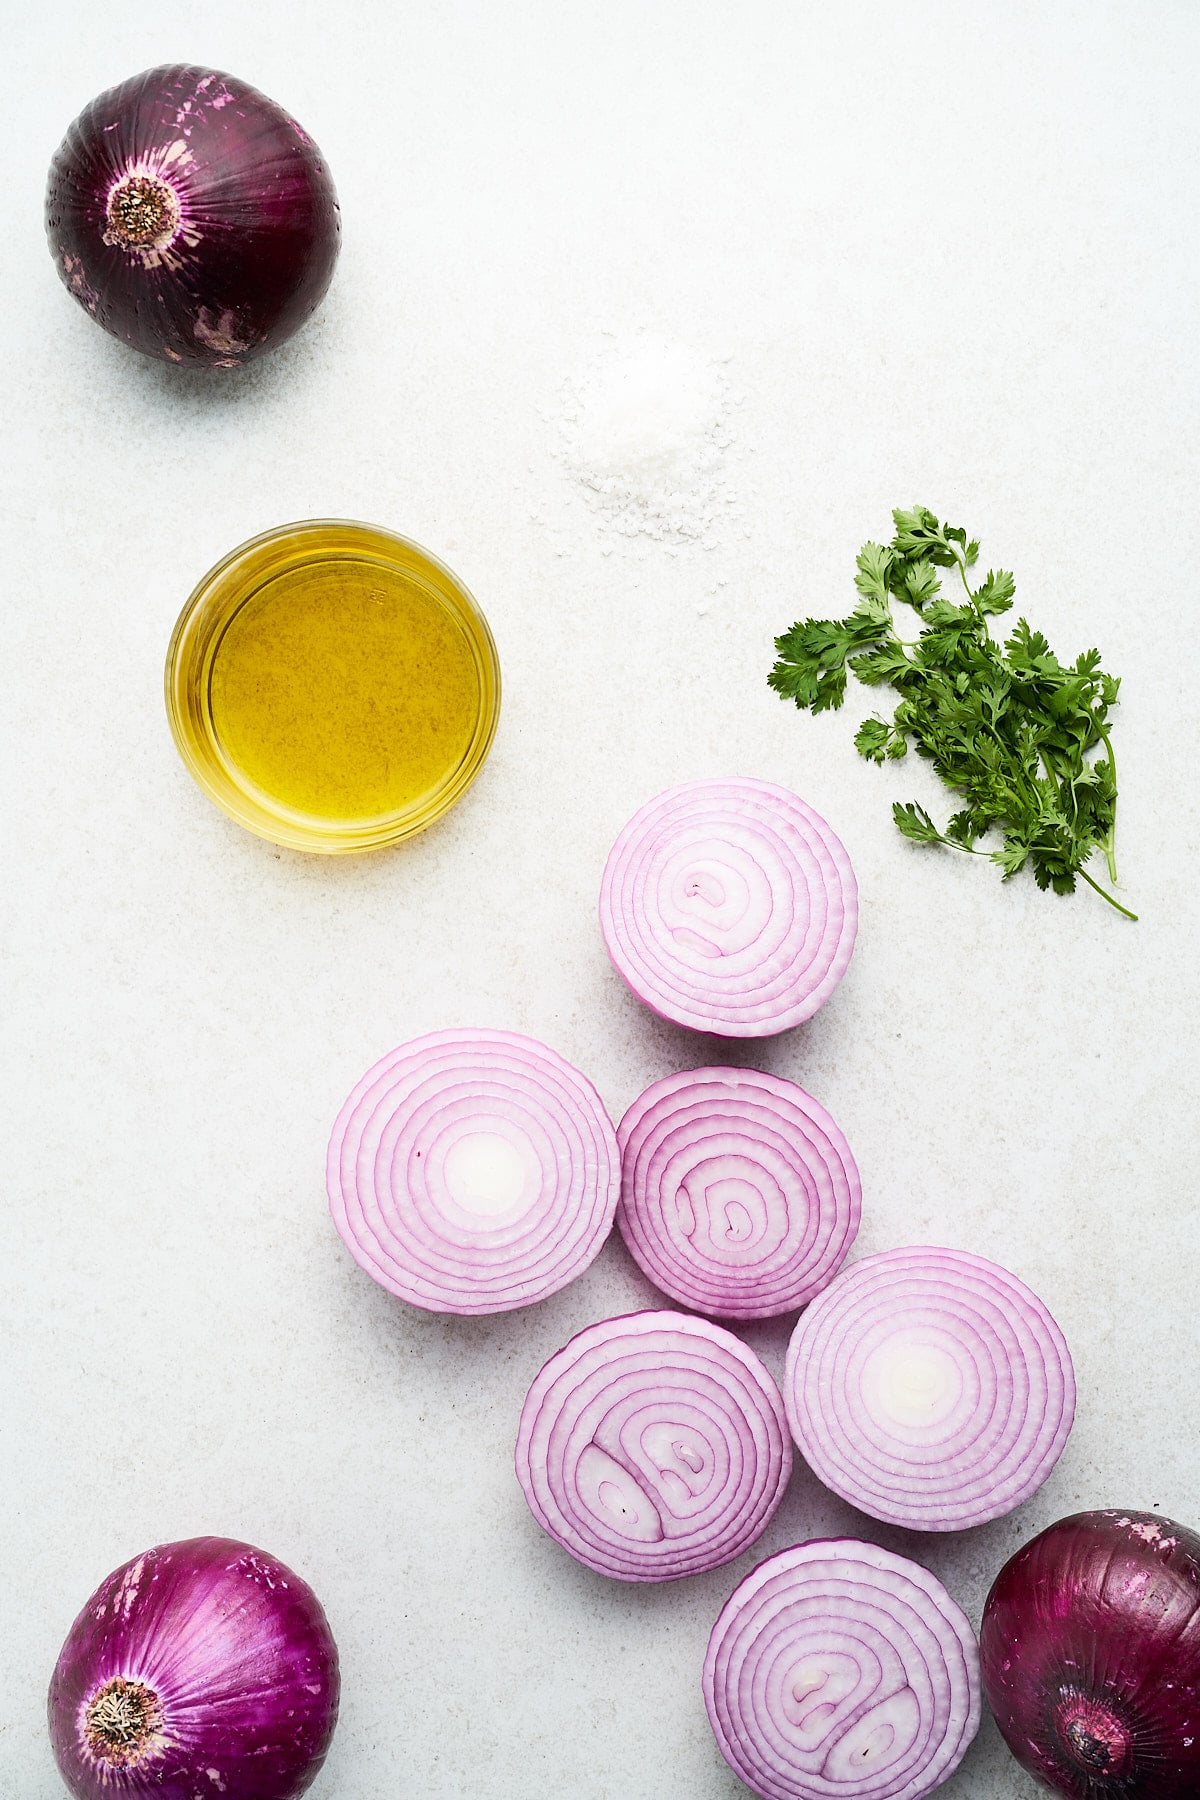 Onions, herbs, oil, and salt.